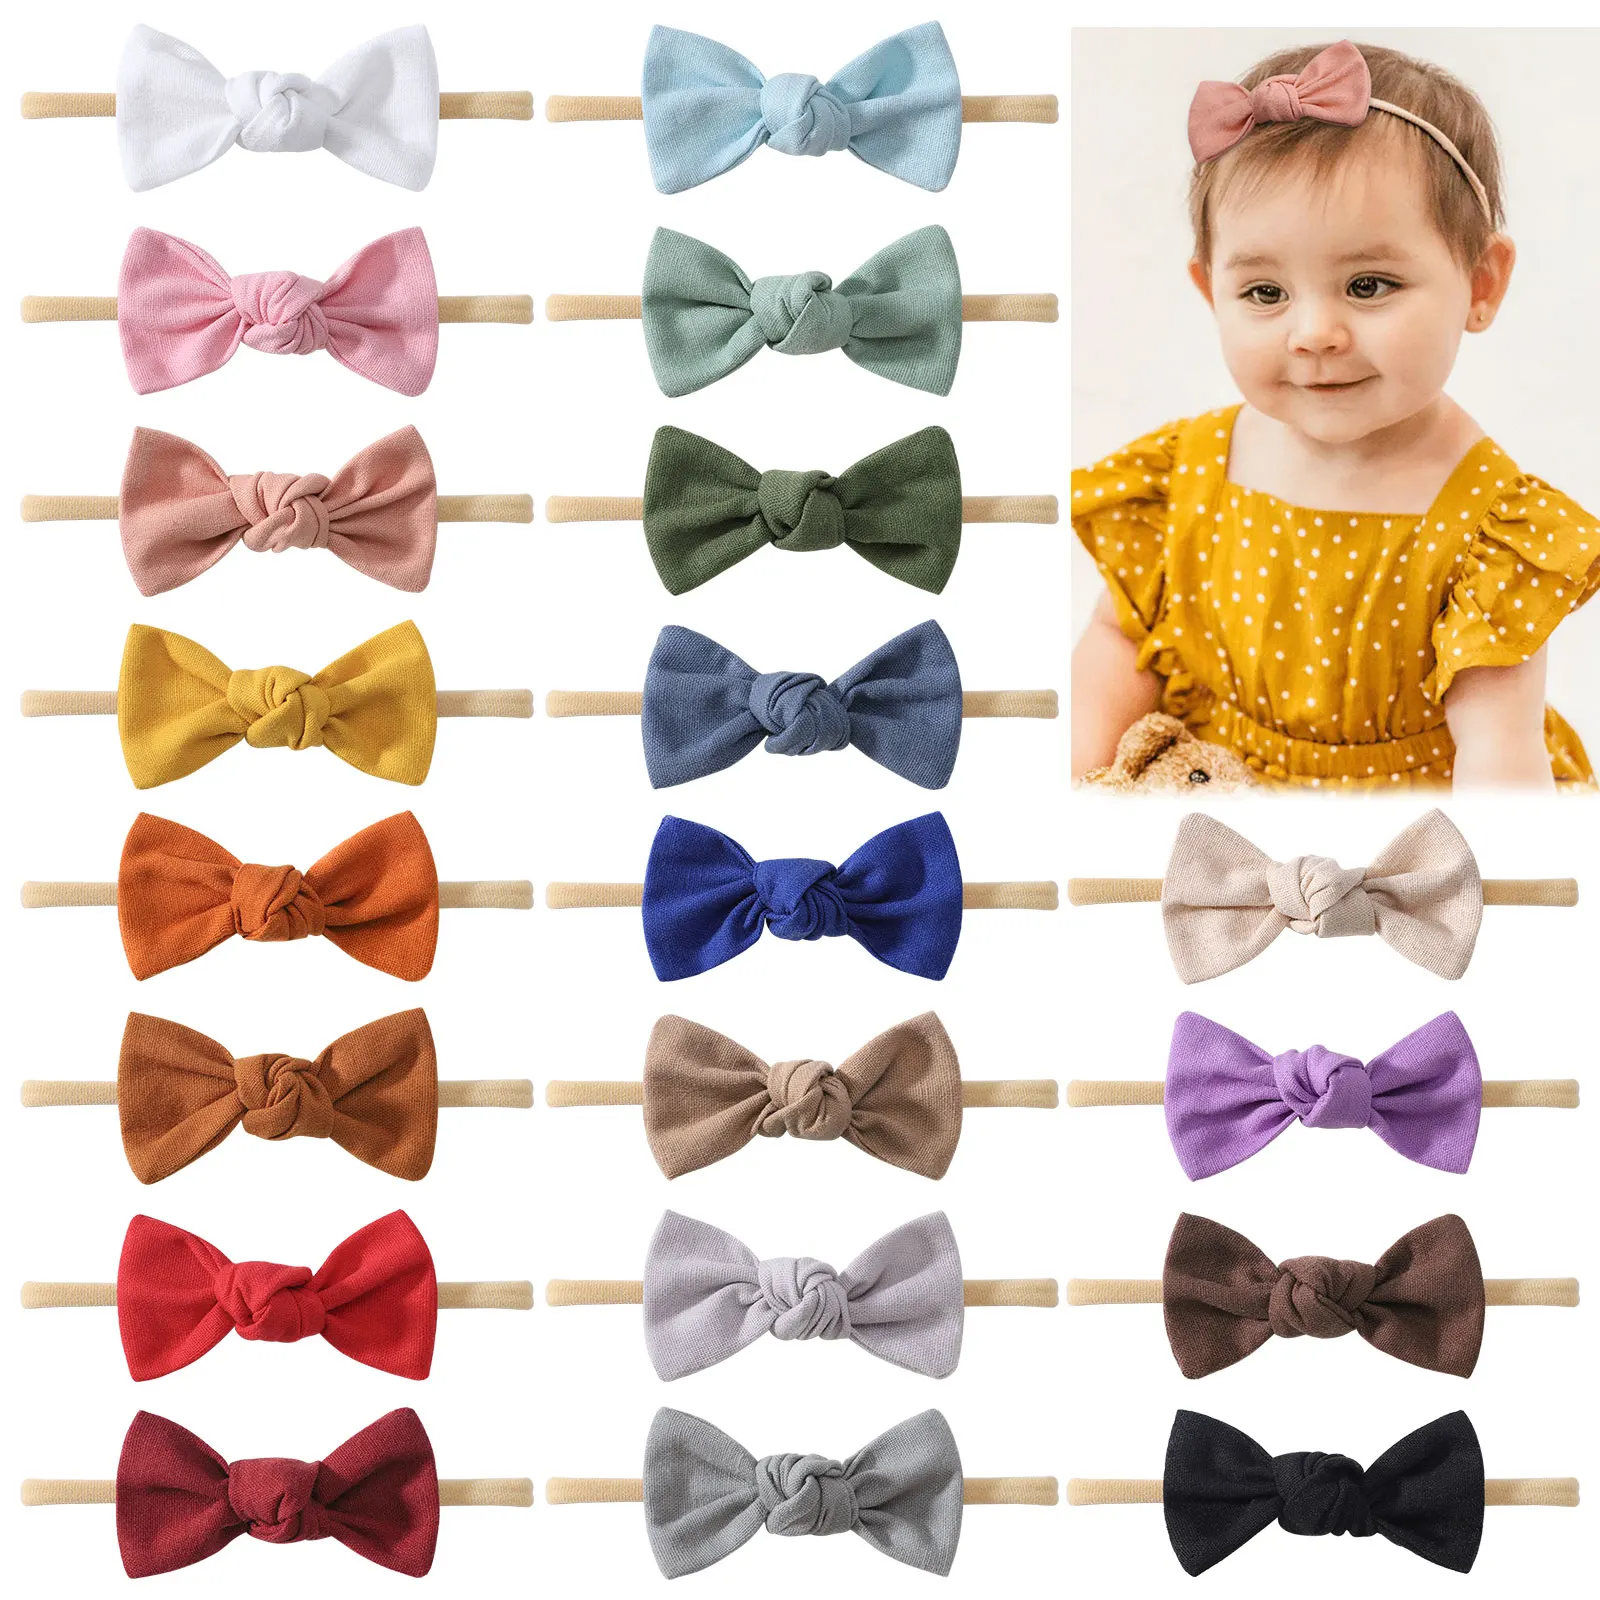 Baby Soft Bow Headband Sweet Knitted Nylon Hair Bands Neonatal Comfortable Casual Headwear Newborn Infant Hair Accessory